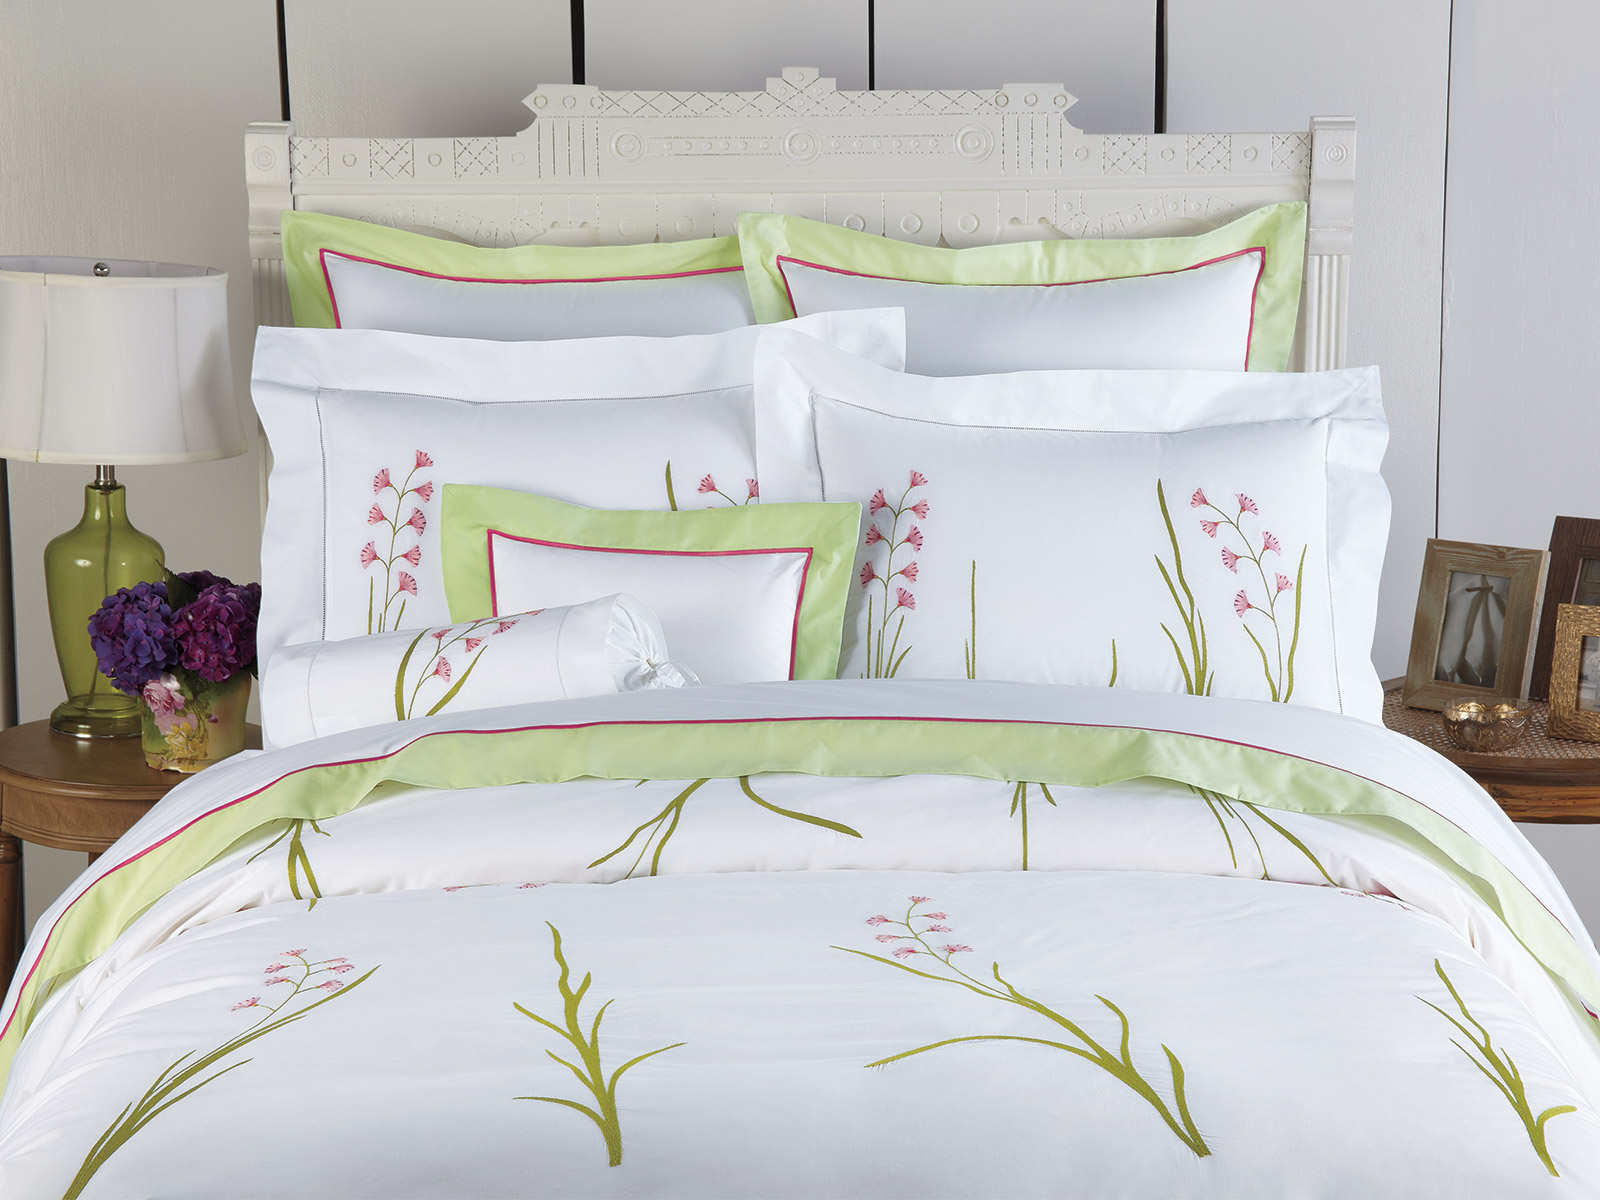 Bedding set Embroidery Convallaria majalis quilt cover flat sheet 2 pillowcases 